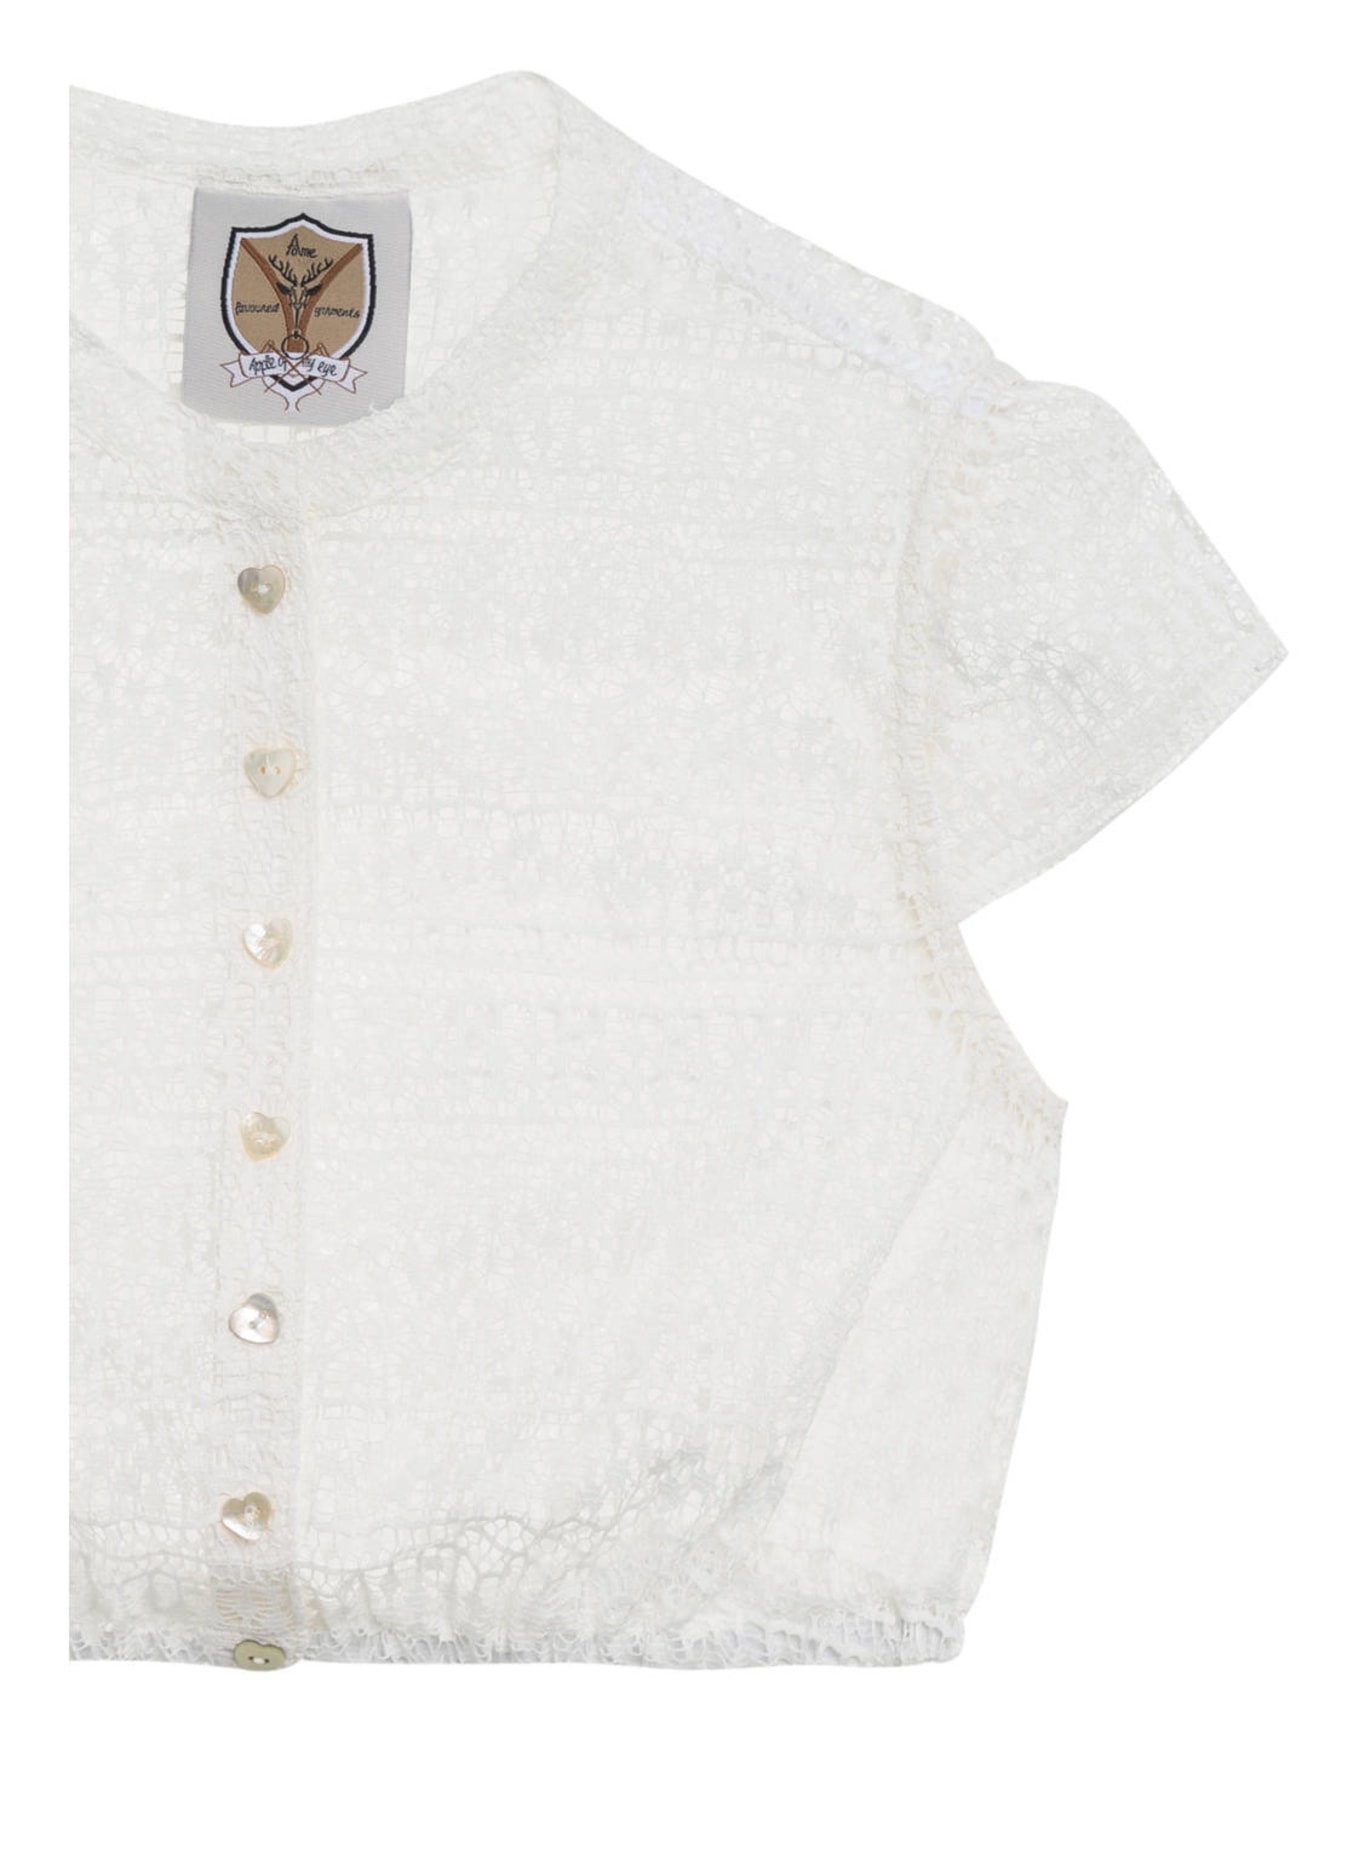 BERWIN & WOLFF Dirndl blouse, Color: WHITE (Image 3)